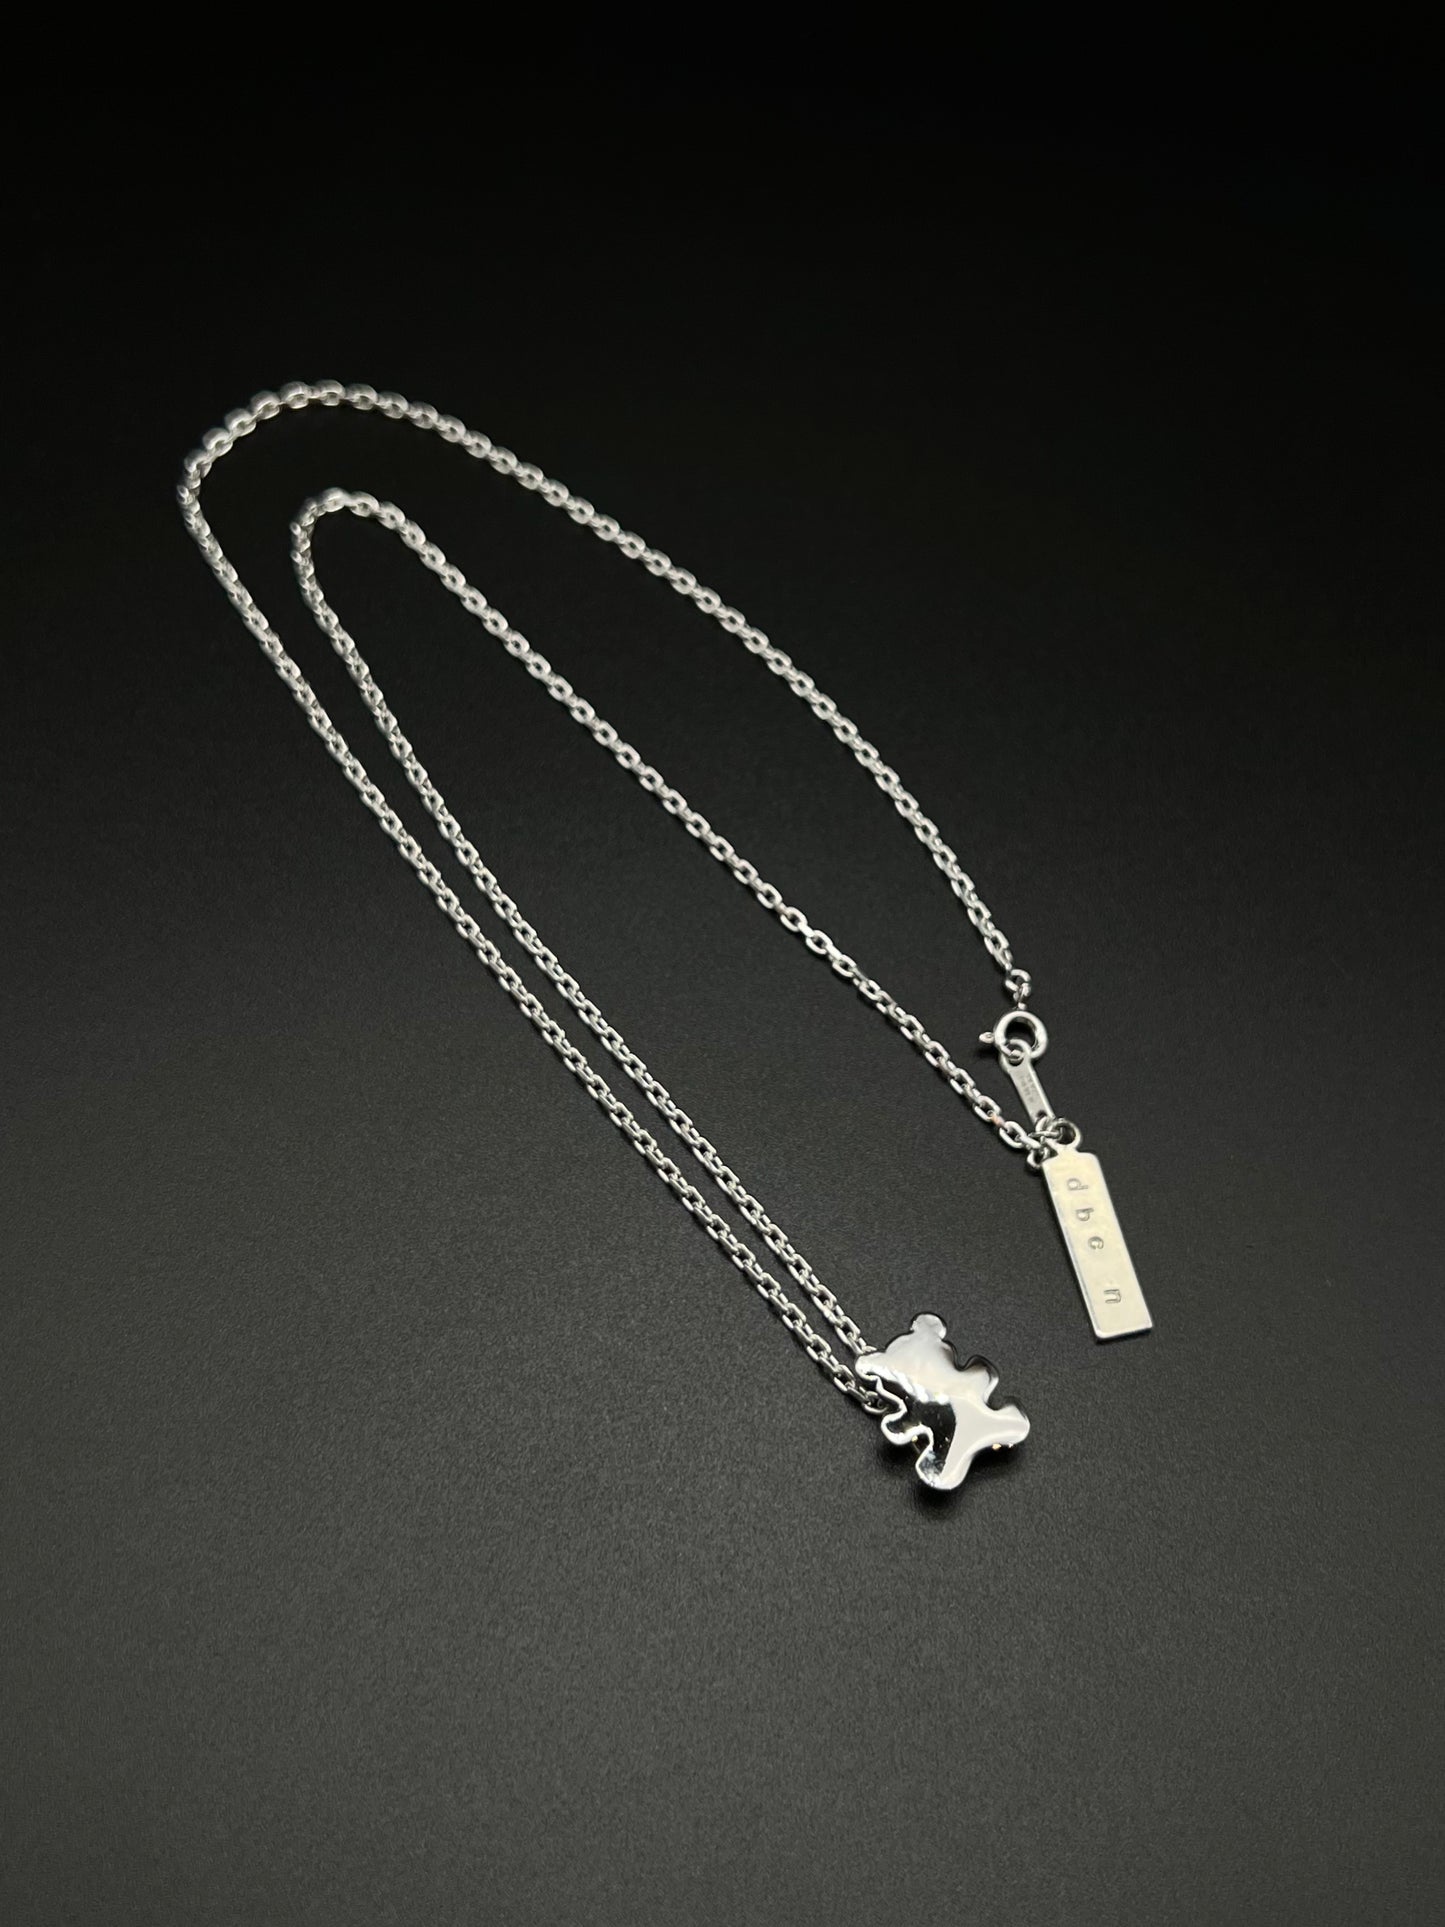 Bear necklace -silver925